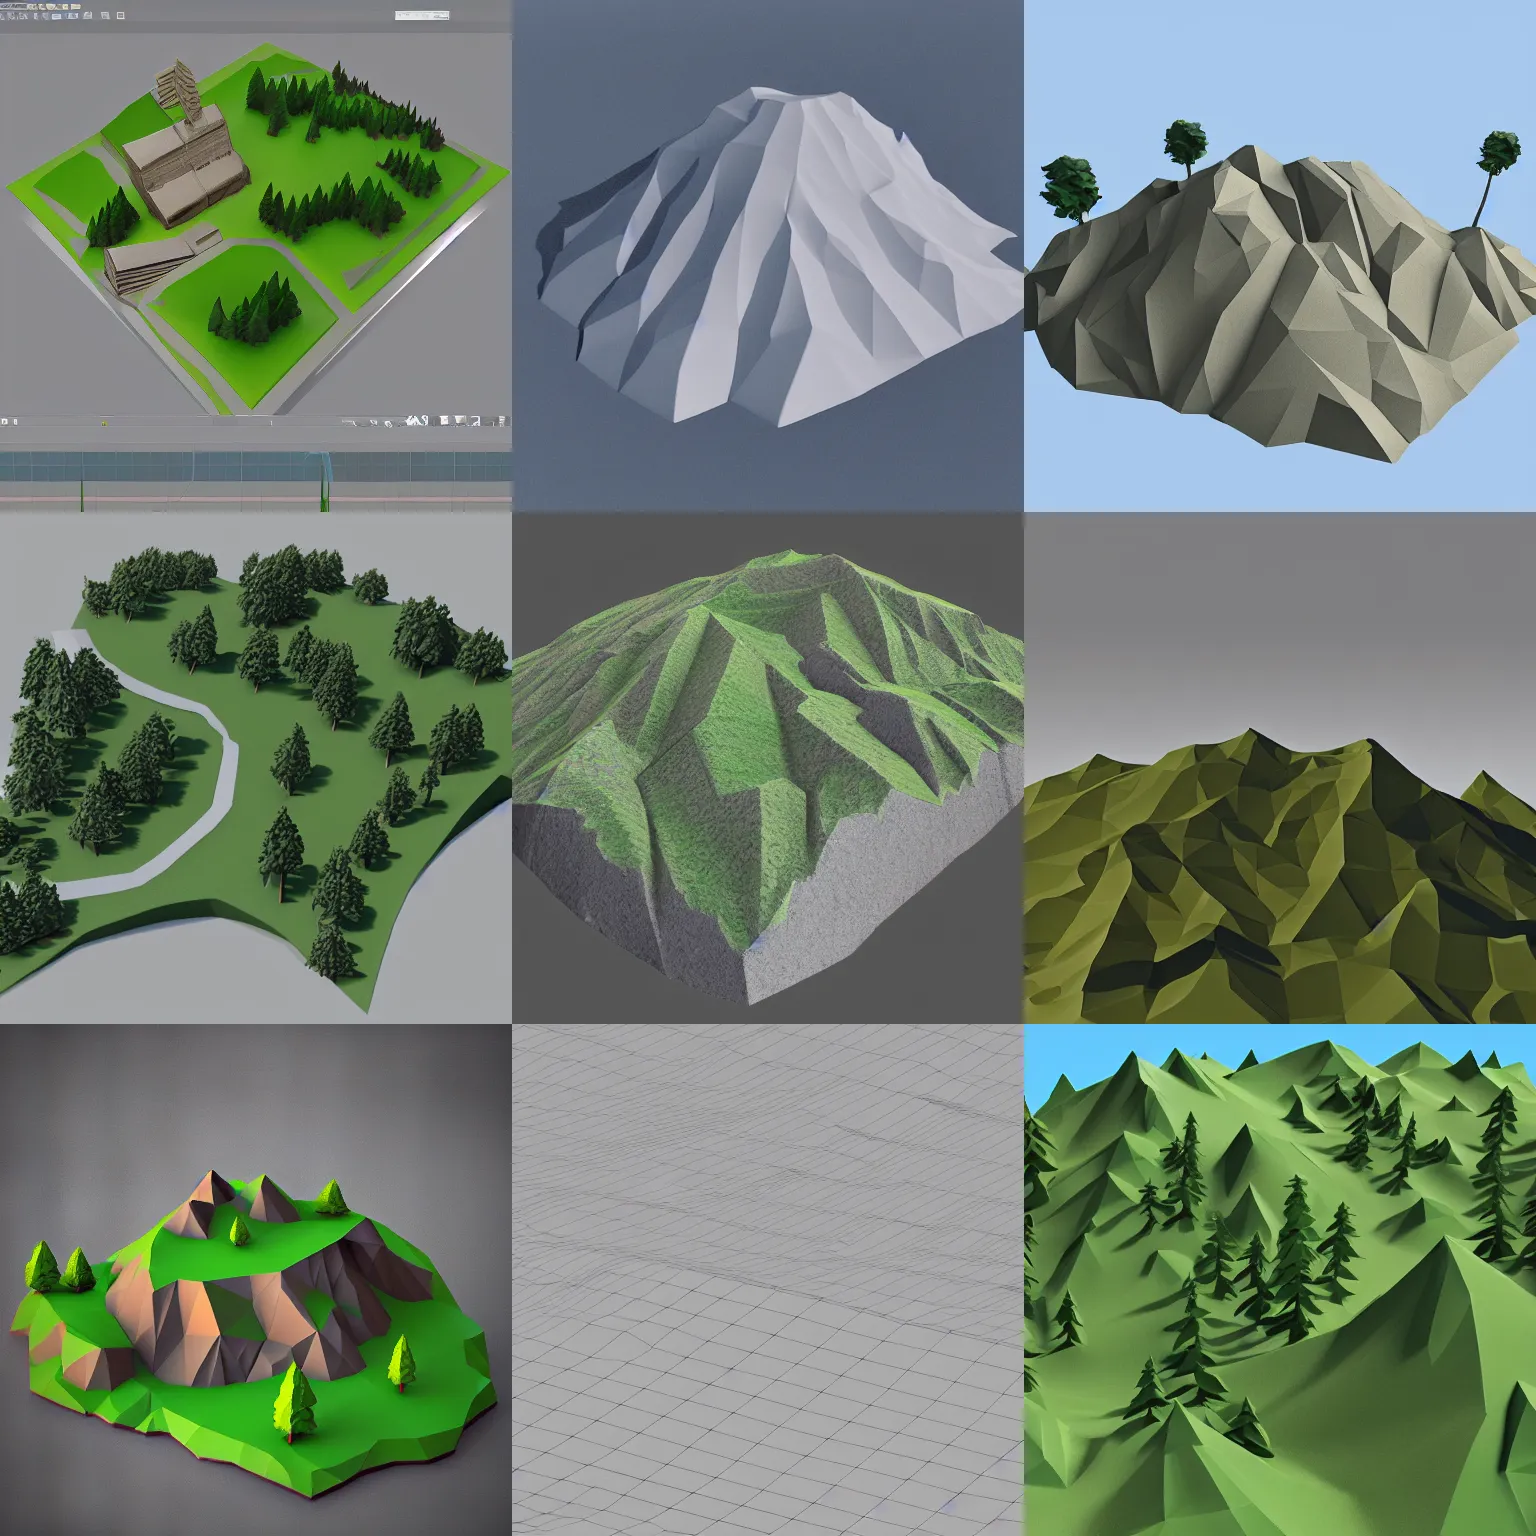 Prompt: low poly 3d model of landscape